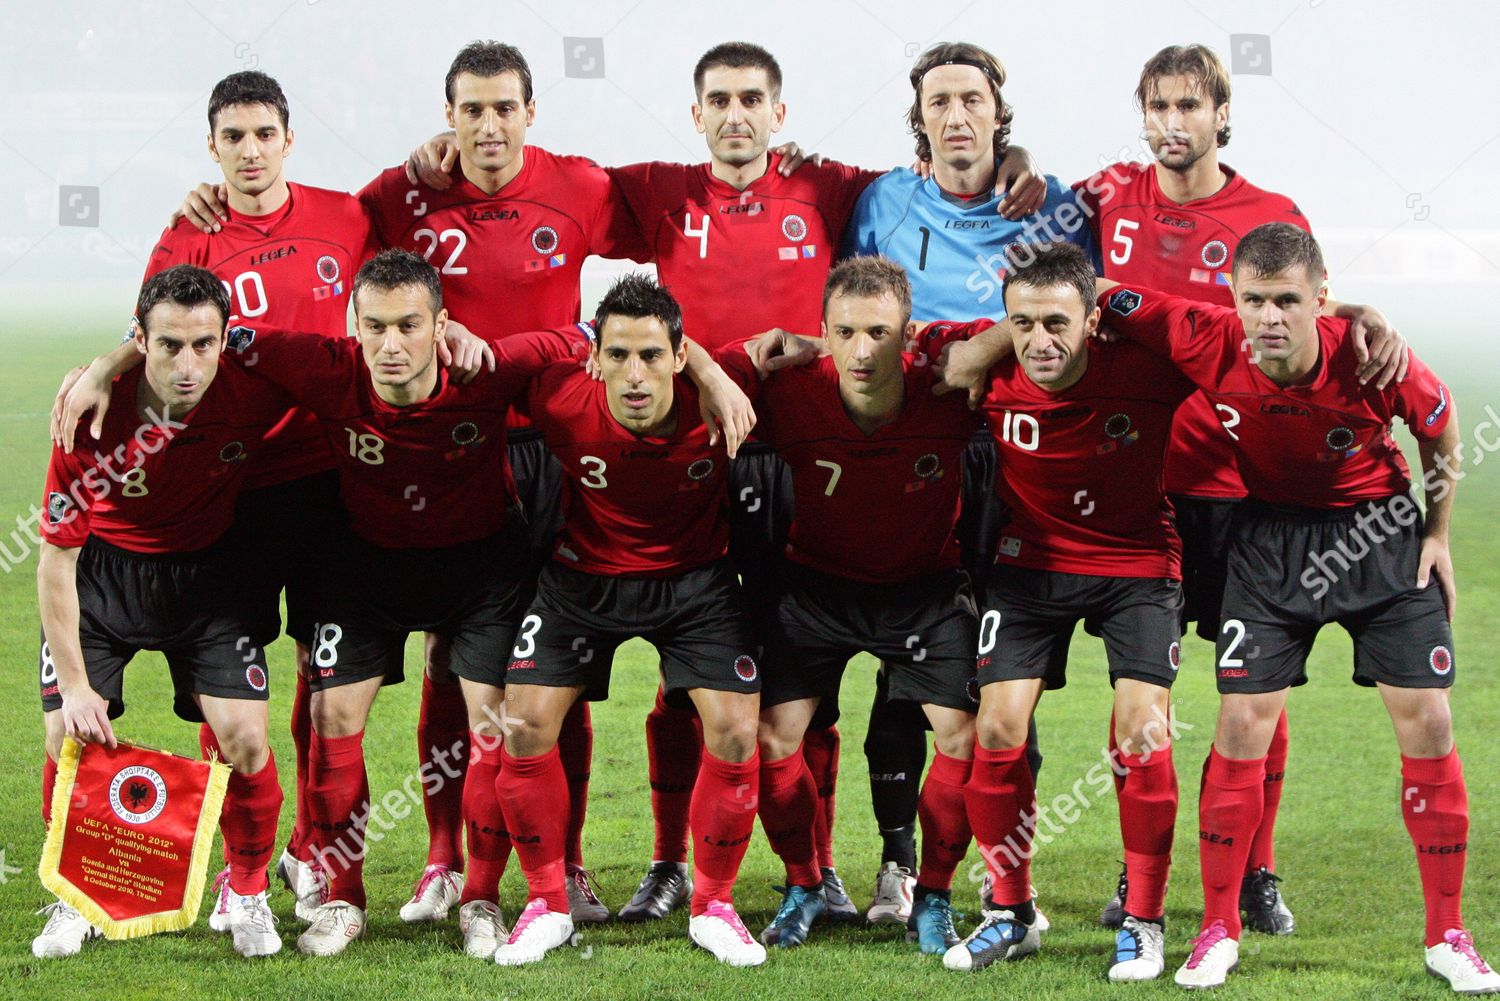 albania national team jersey